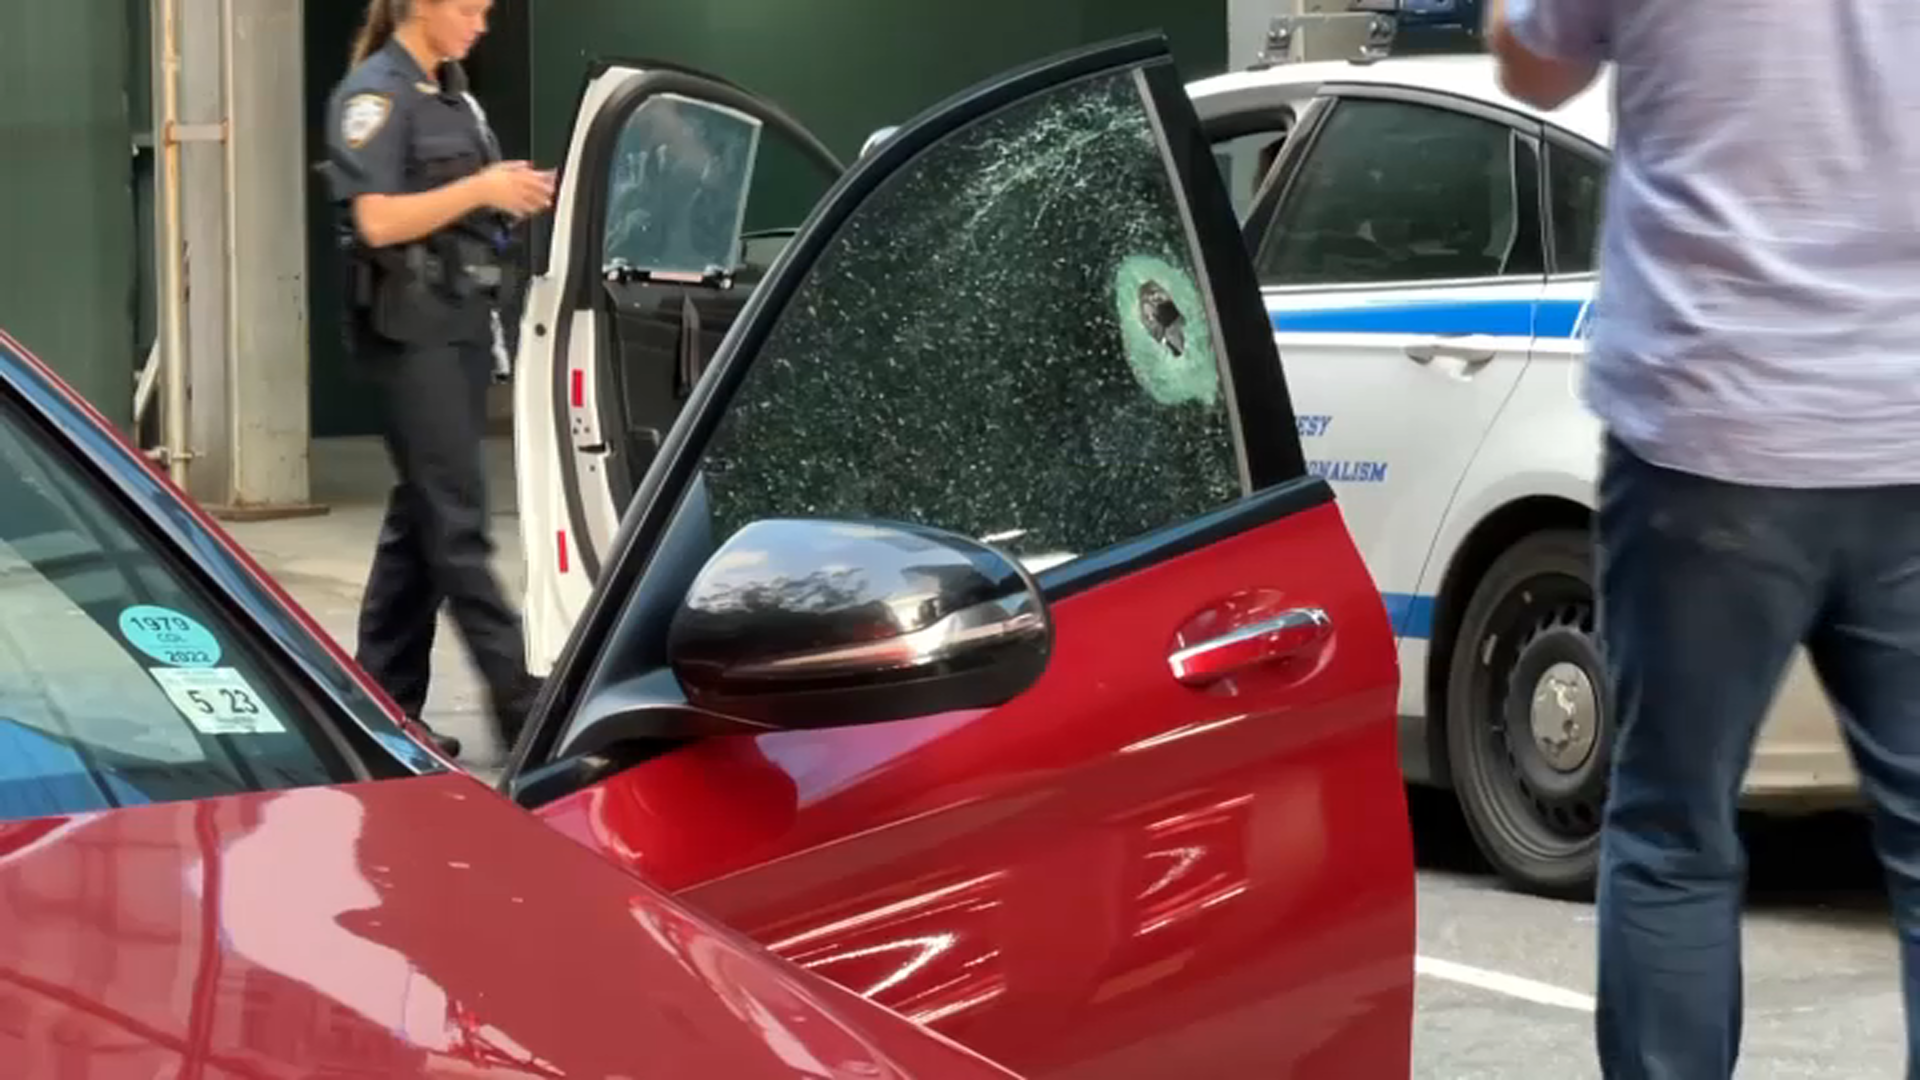 Bullet hole pierces window of car parked near Midtown church.